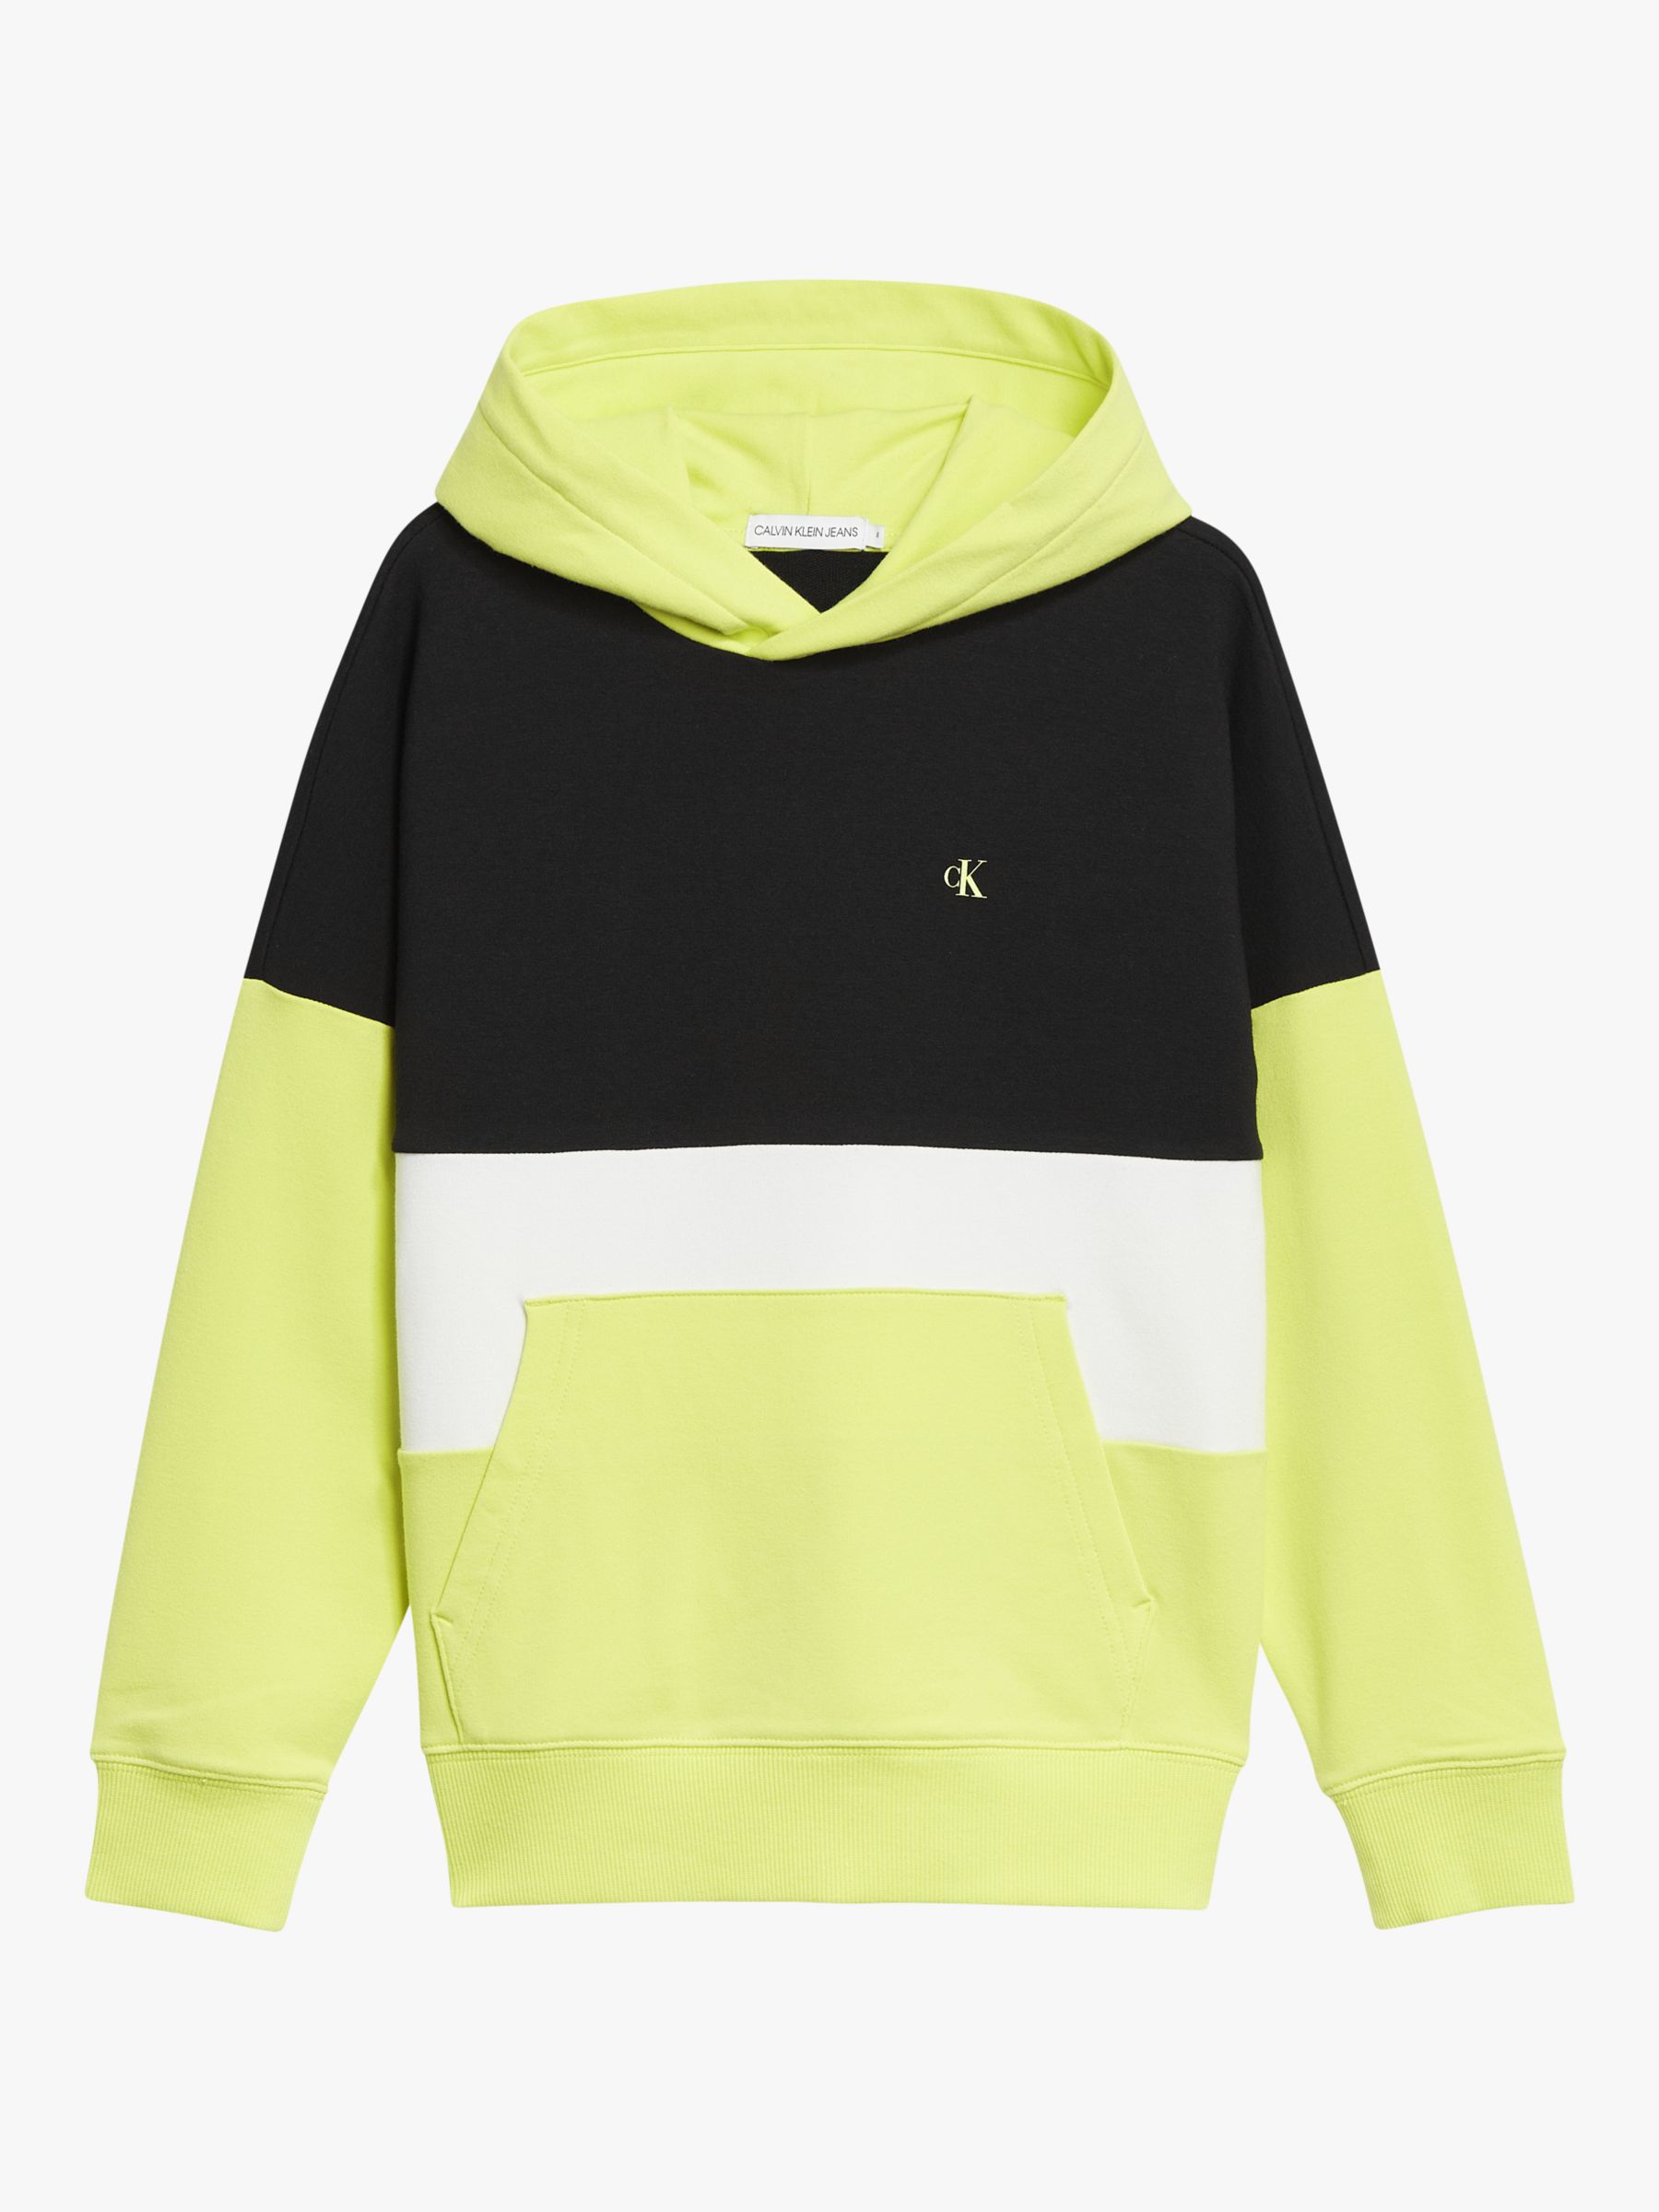 Calvin Klein Kids' Colour Block Hoodie, Lime Yellow